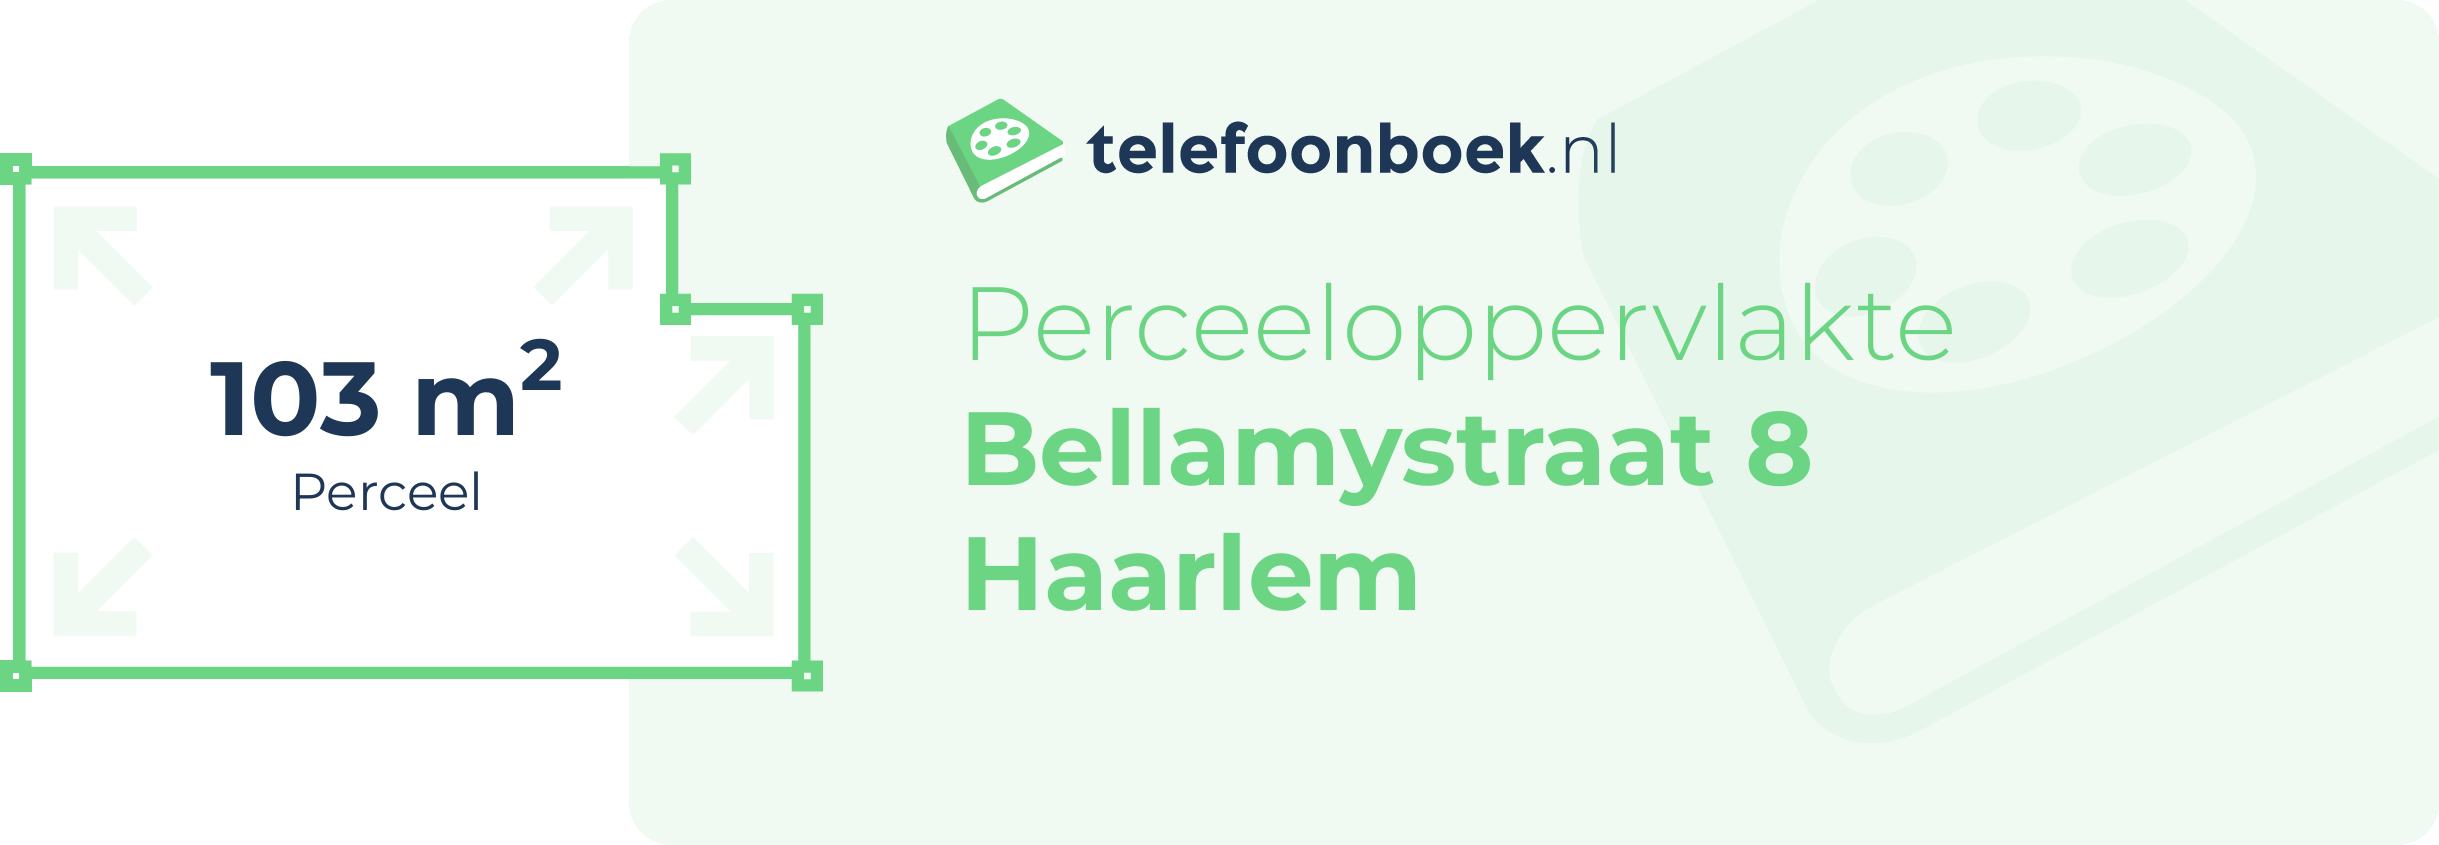 Perceeloppervlakte Bellamystraat 8 Haarlem